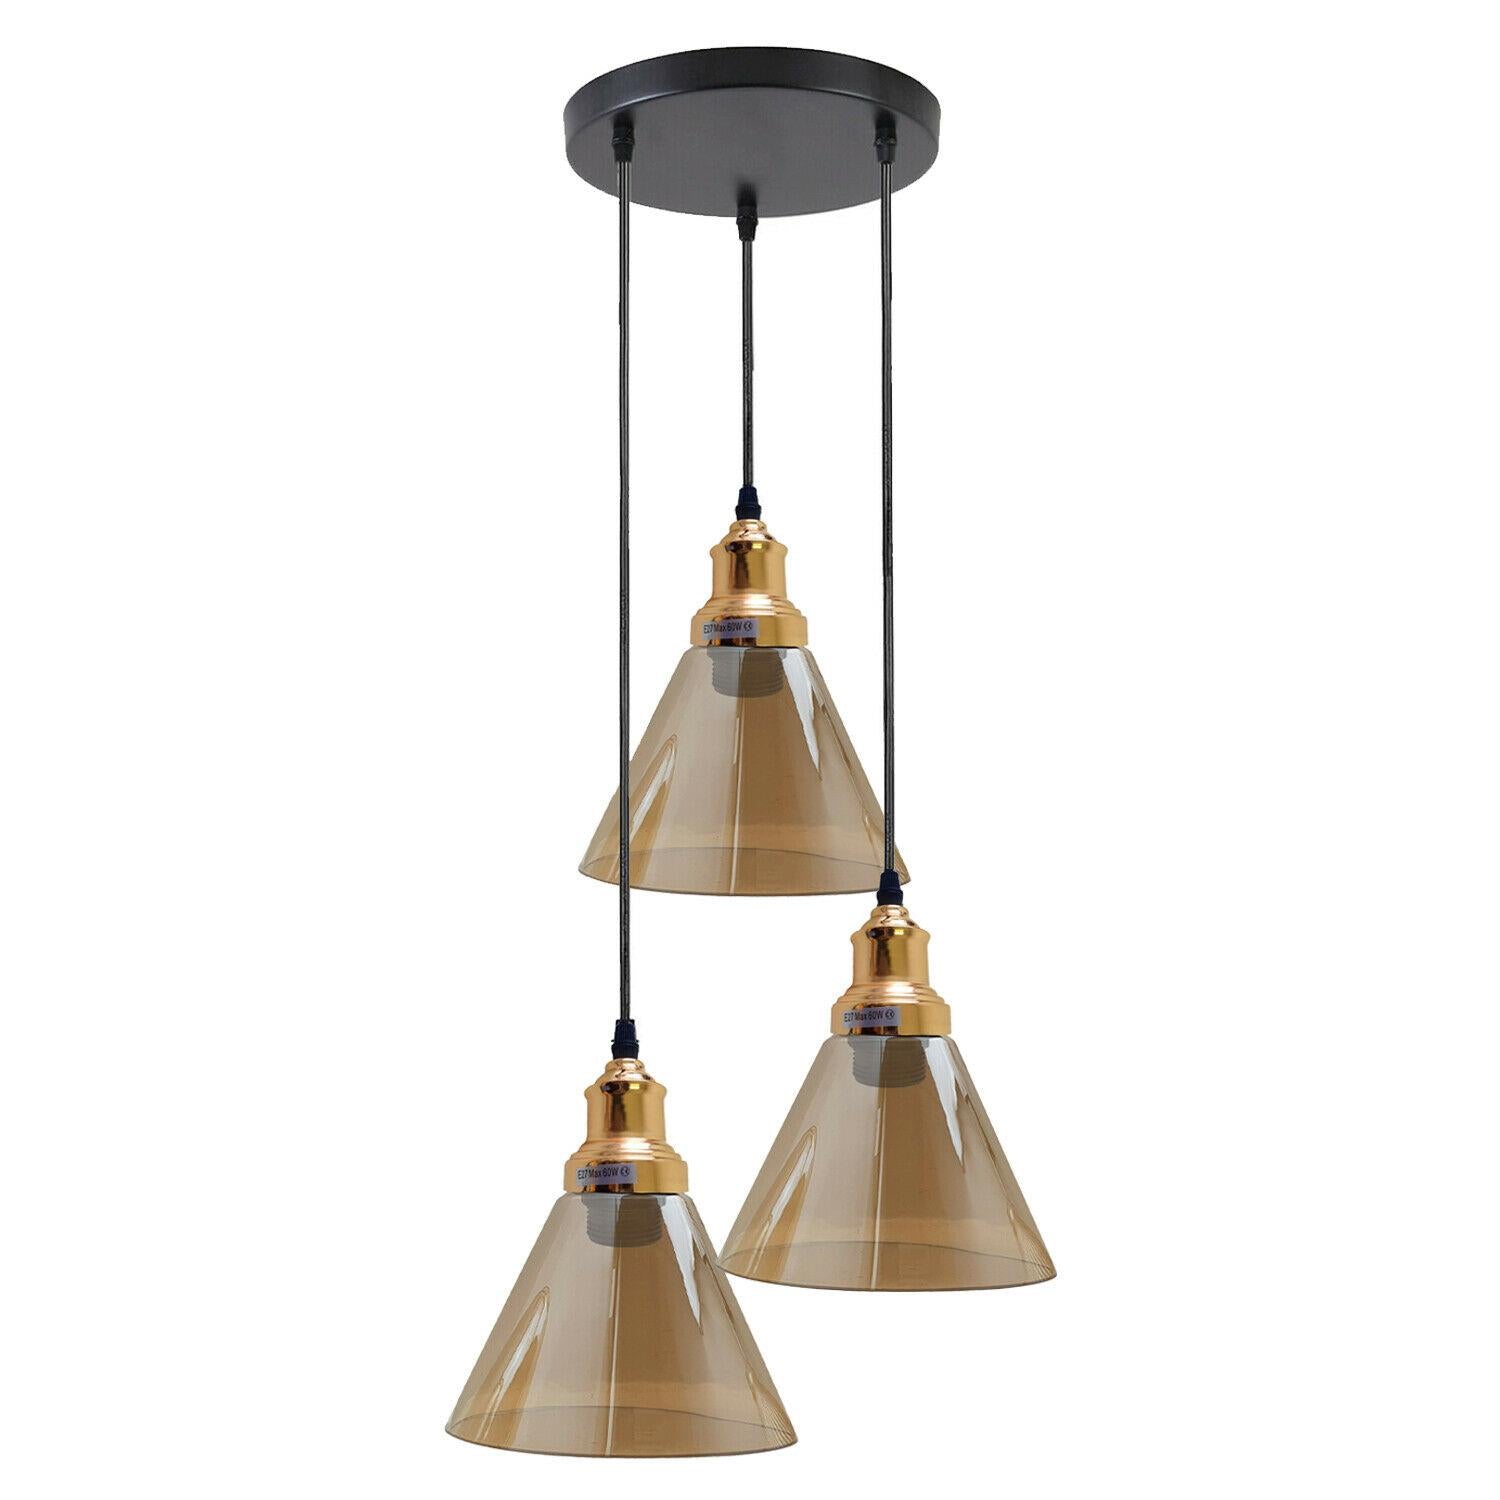 3 Outlet Industrial Retro Loft Glass Ceiling Lampshade Pendant Light~1428 - LEDSone UK Ltd